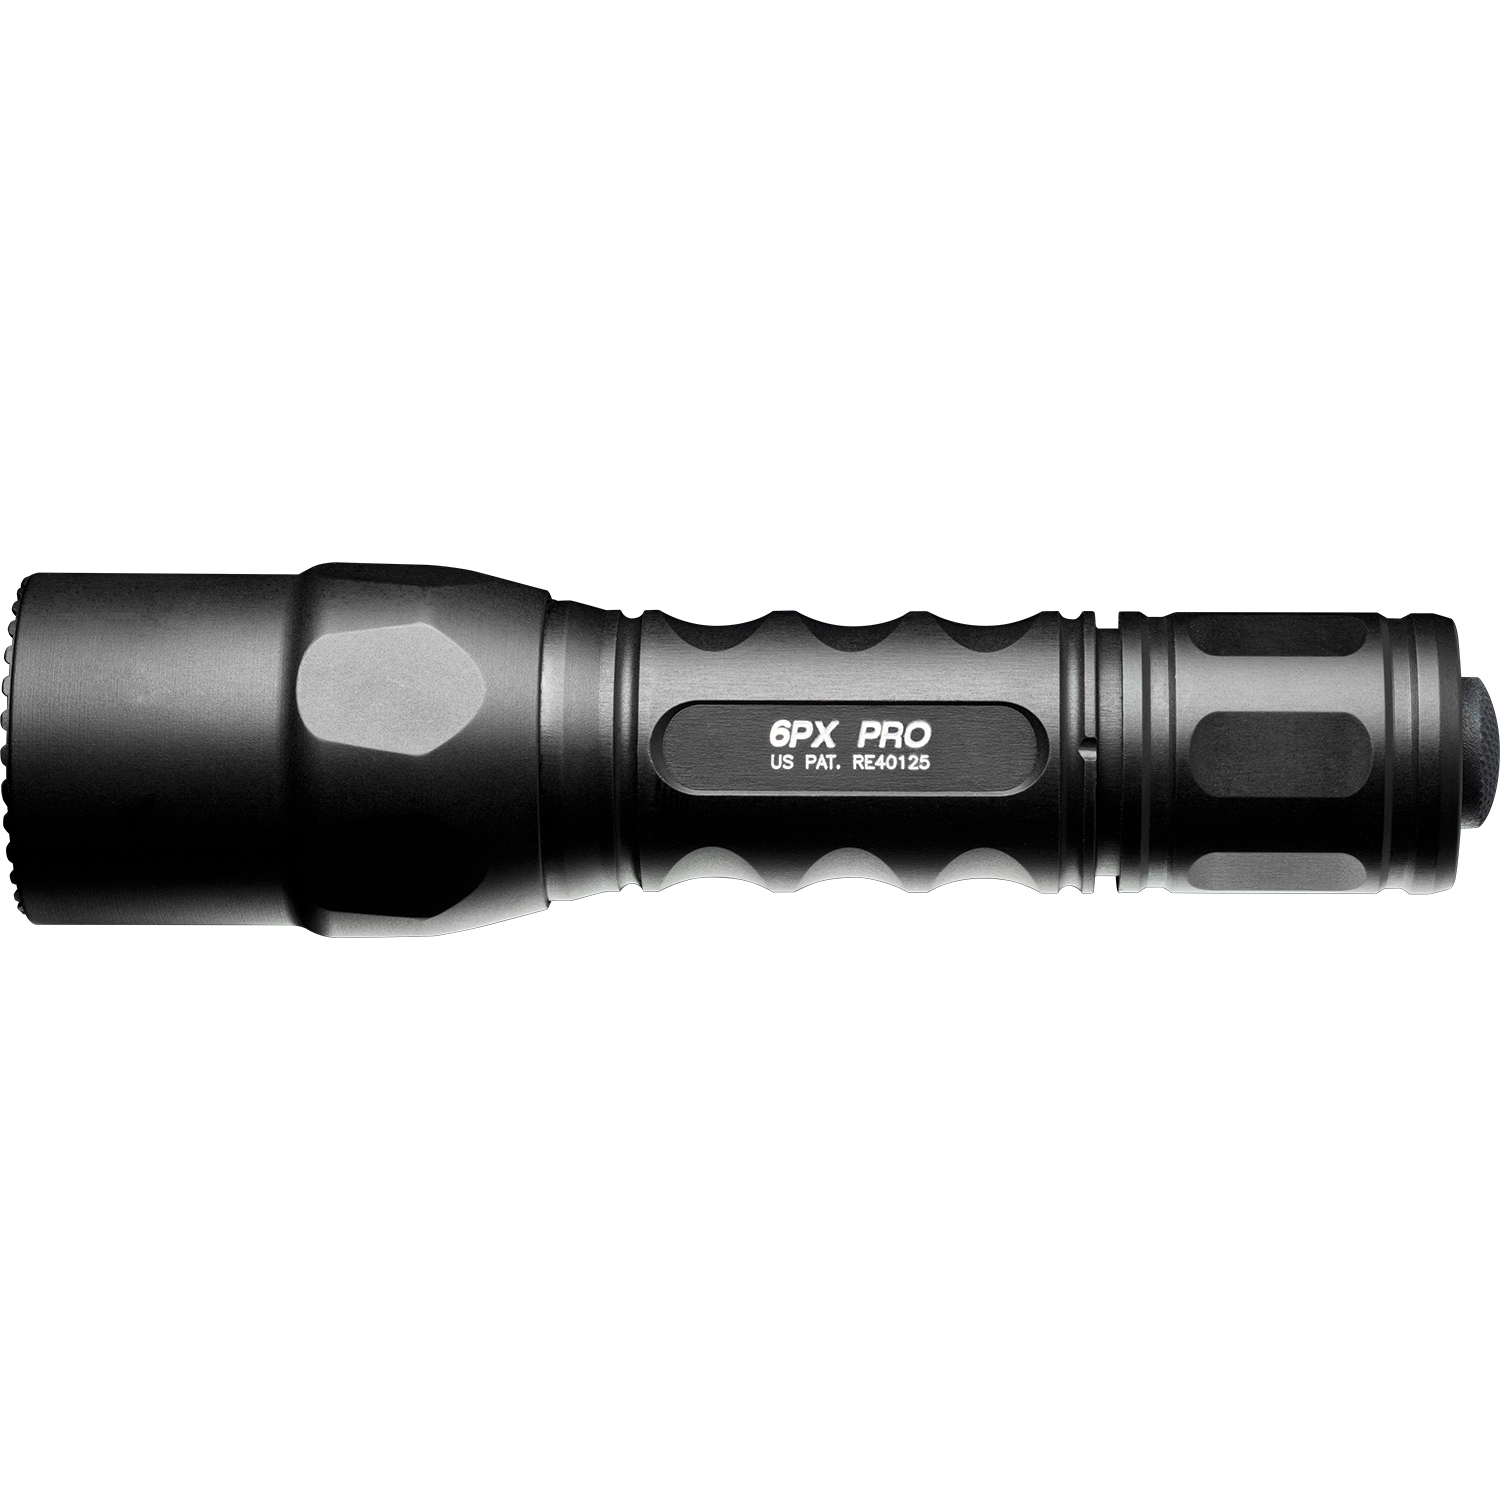 Dual-output led 6px pro flashlight Flashlights  lighting Prefair